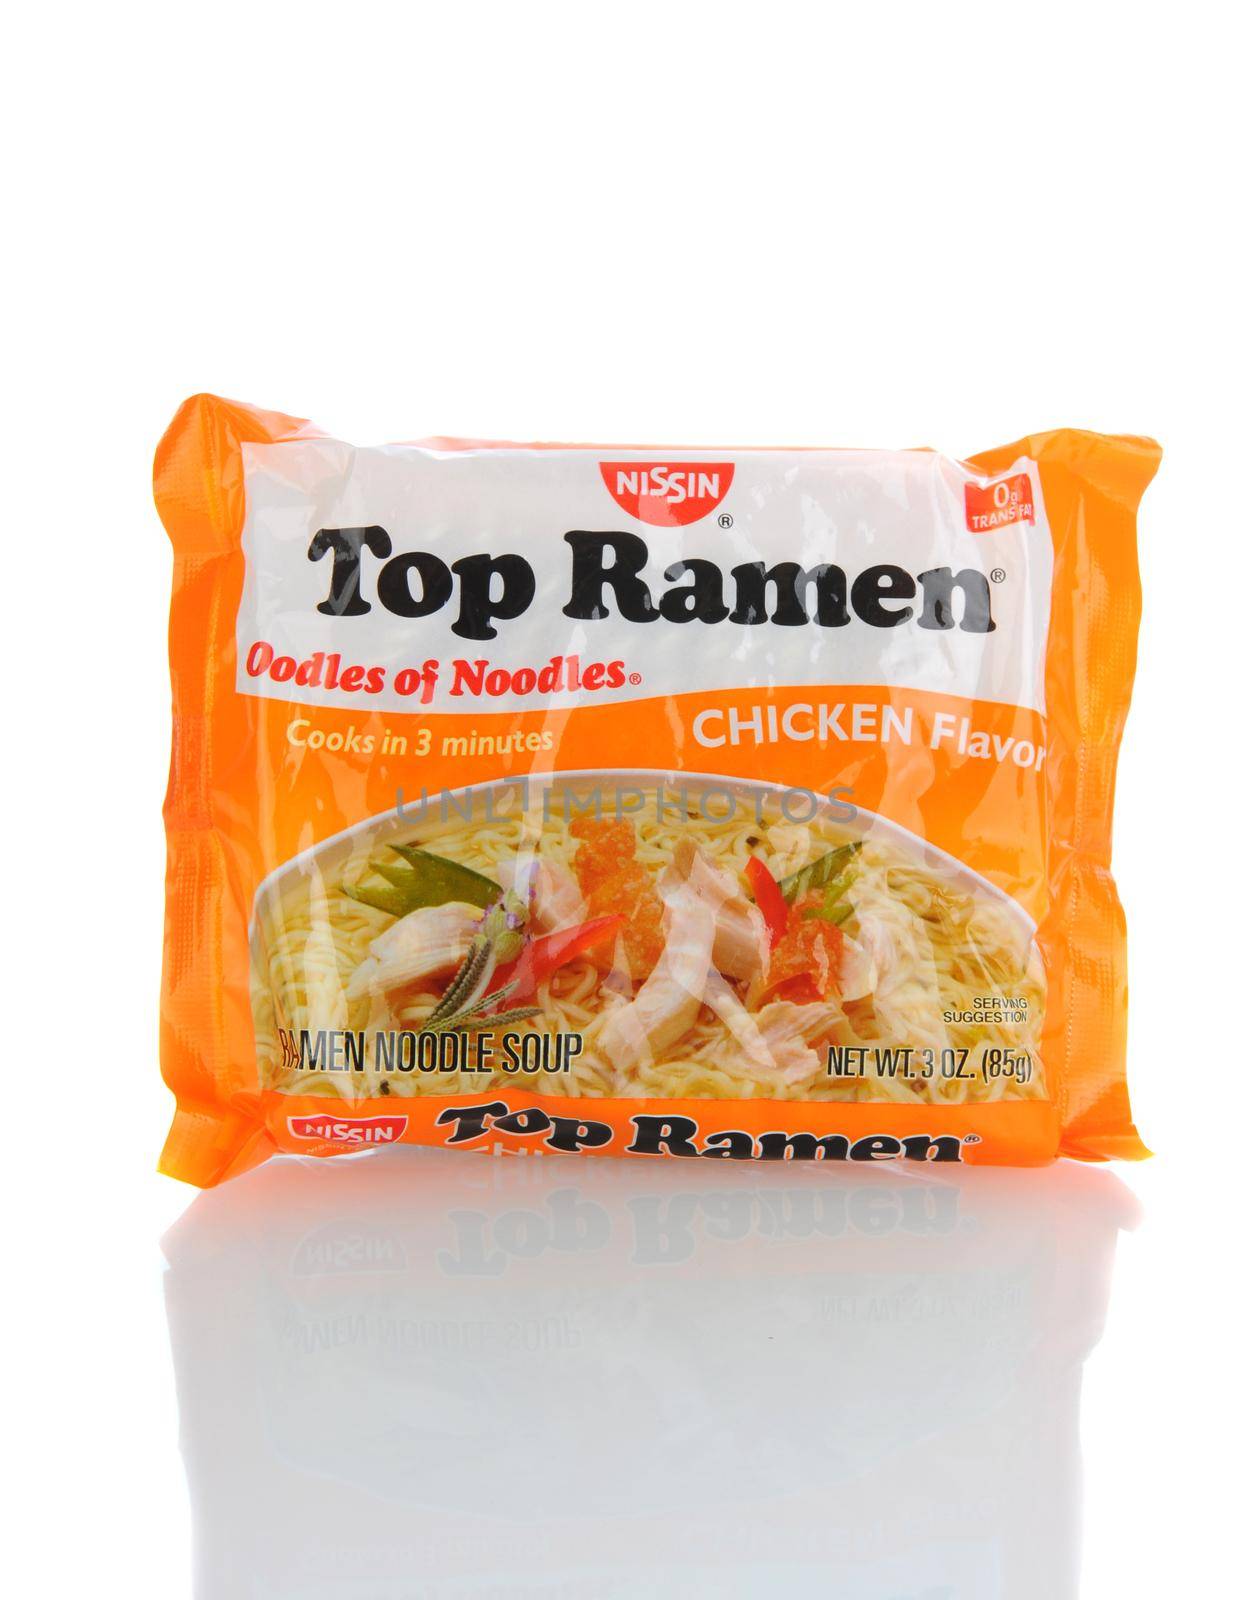 Top Ramen Chicken Flavor by sCukrov